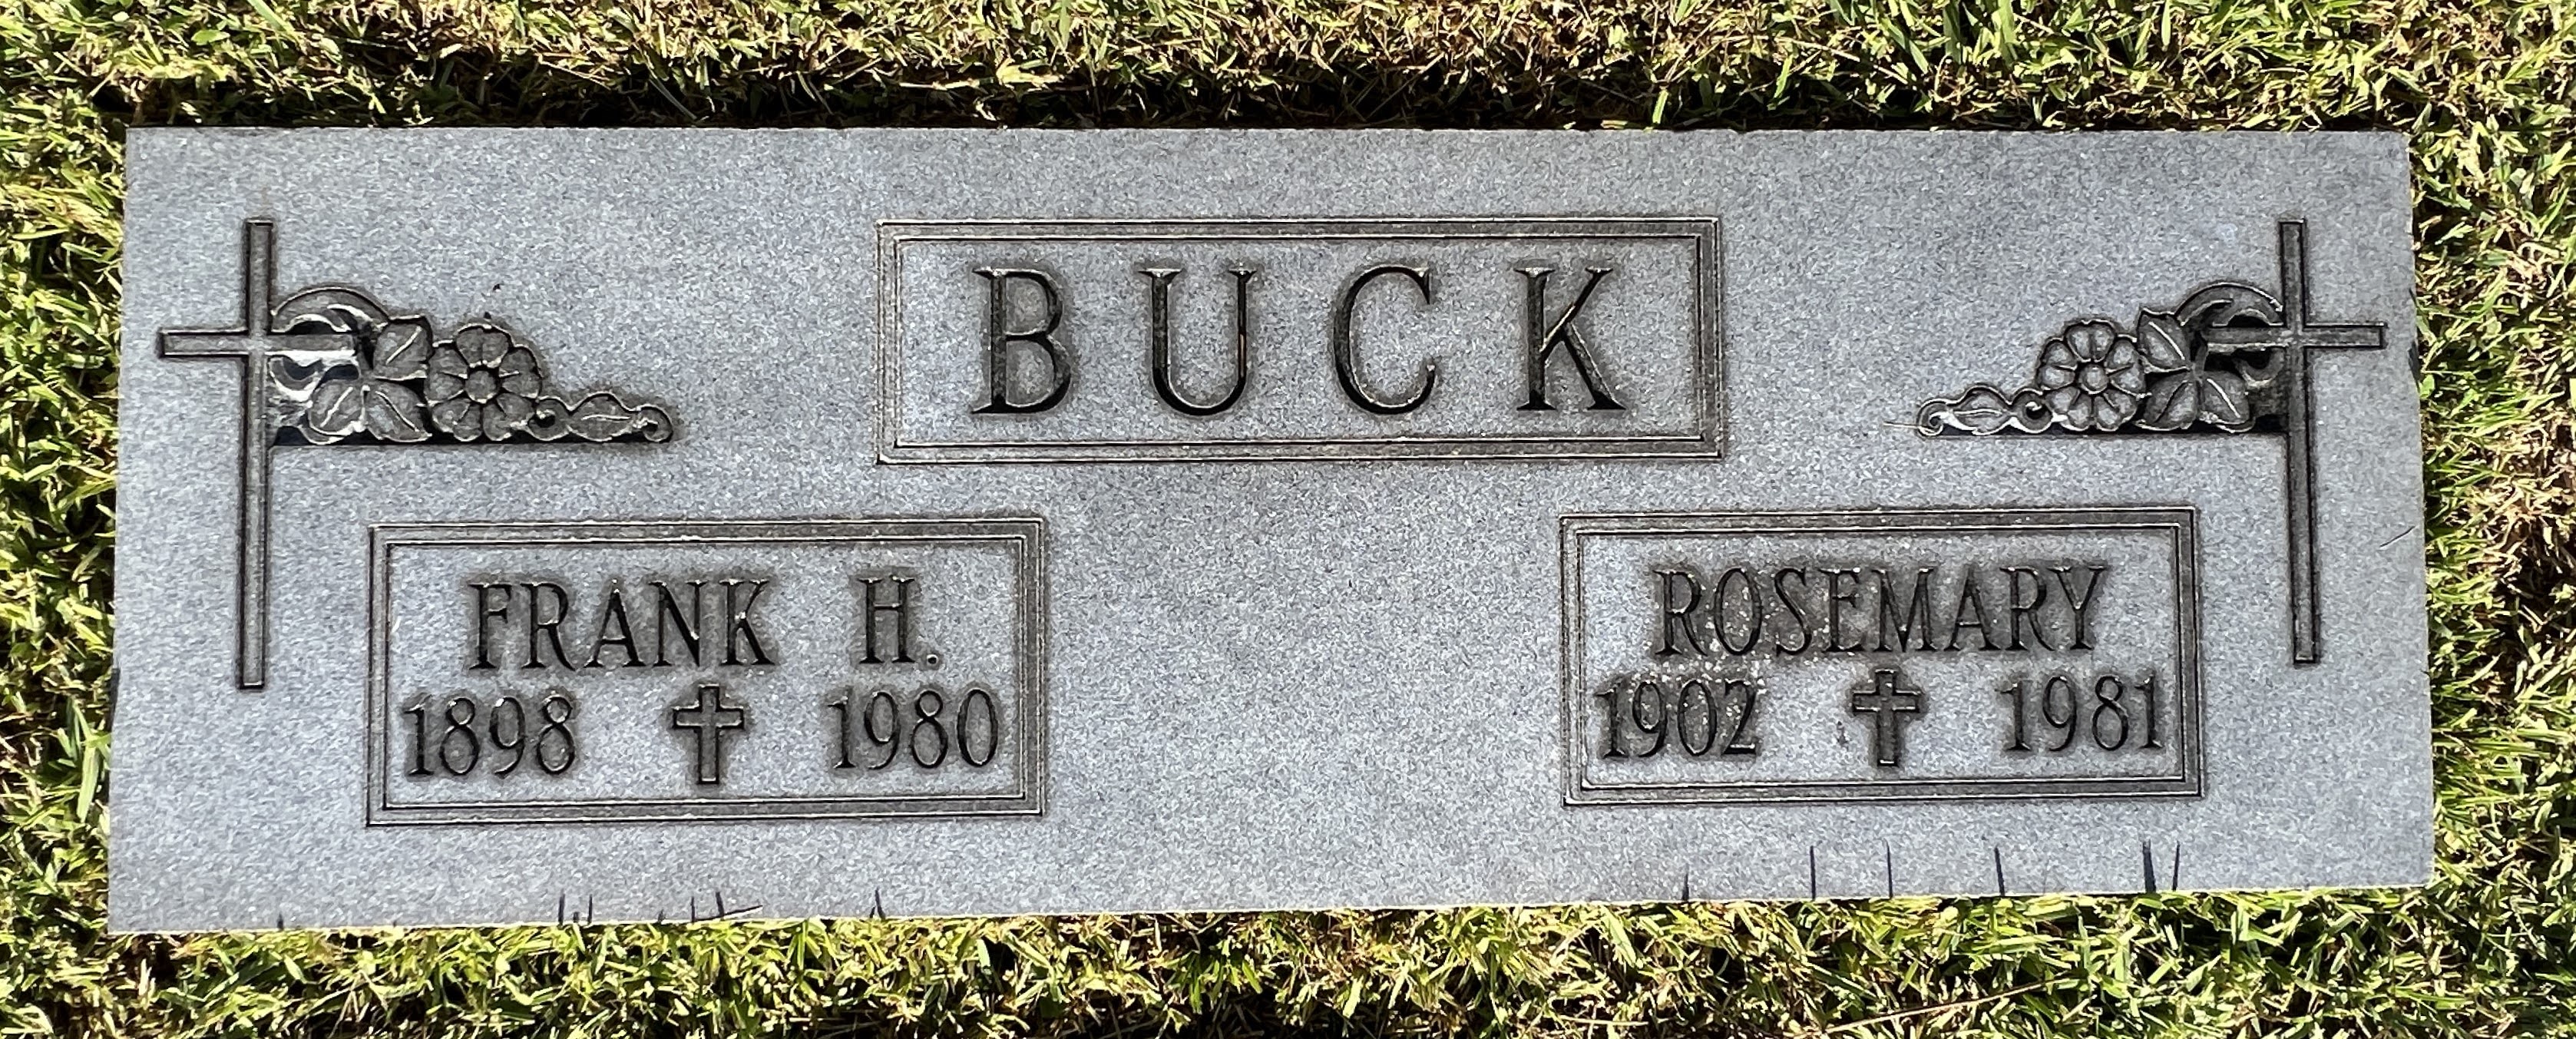 Frank H Buck